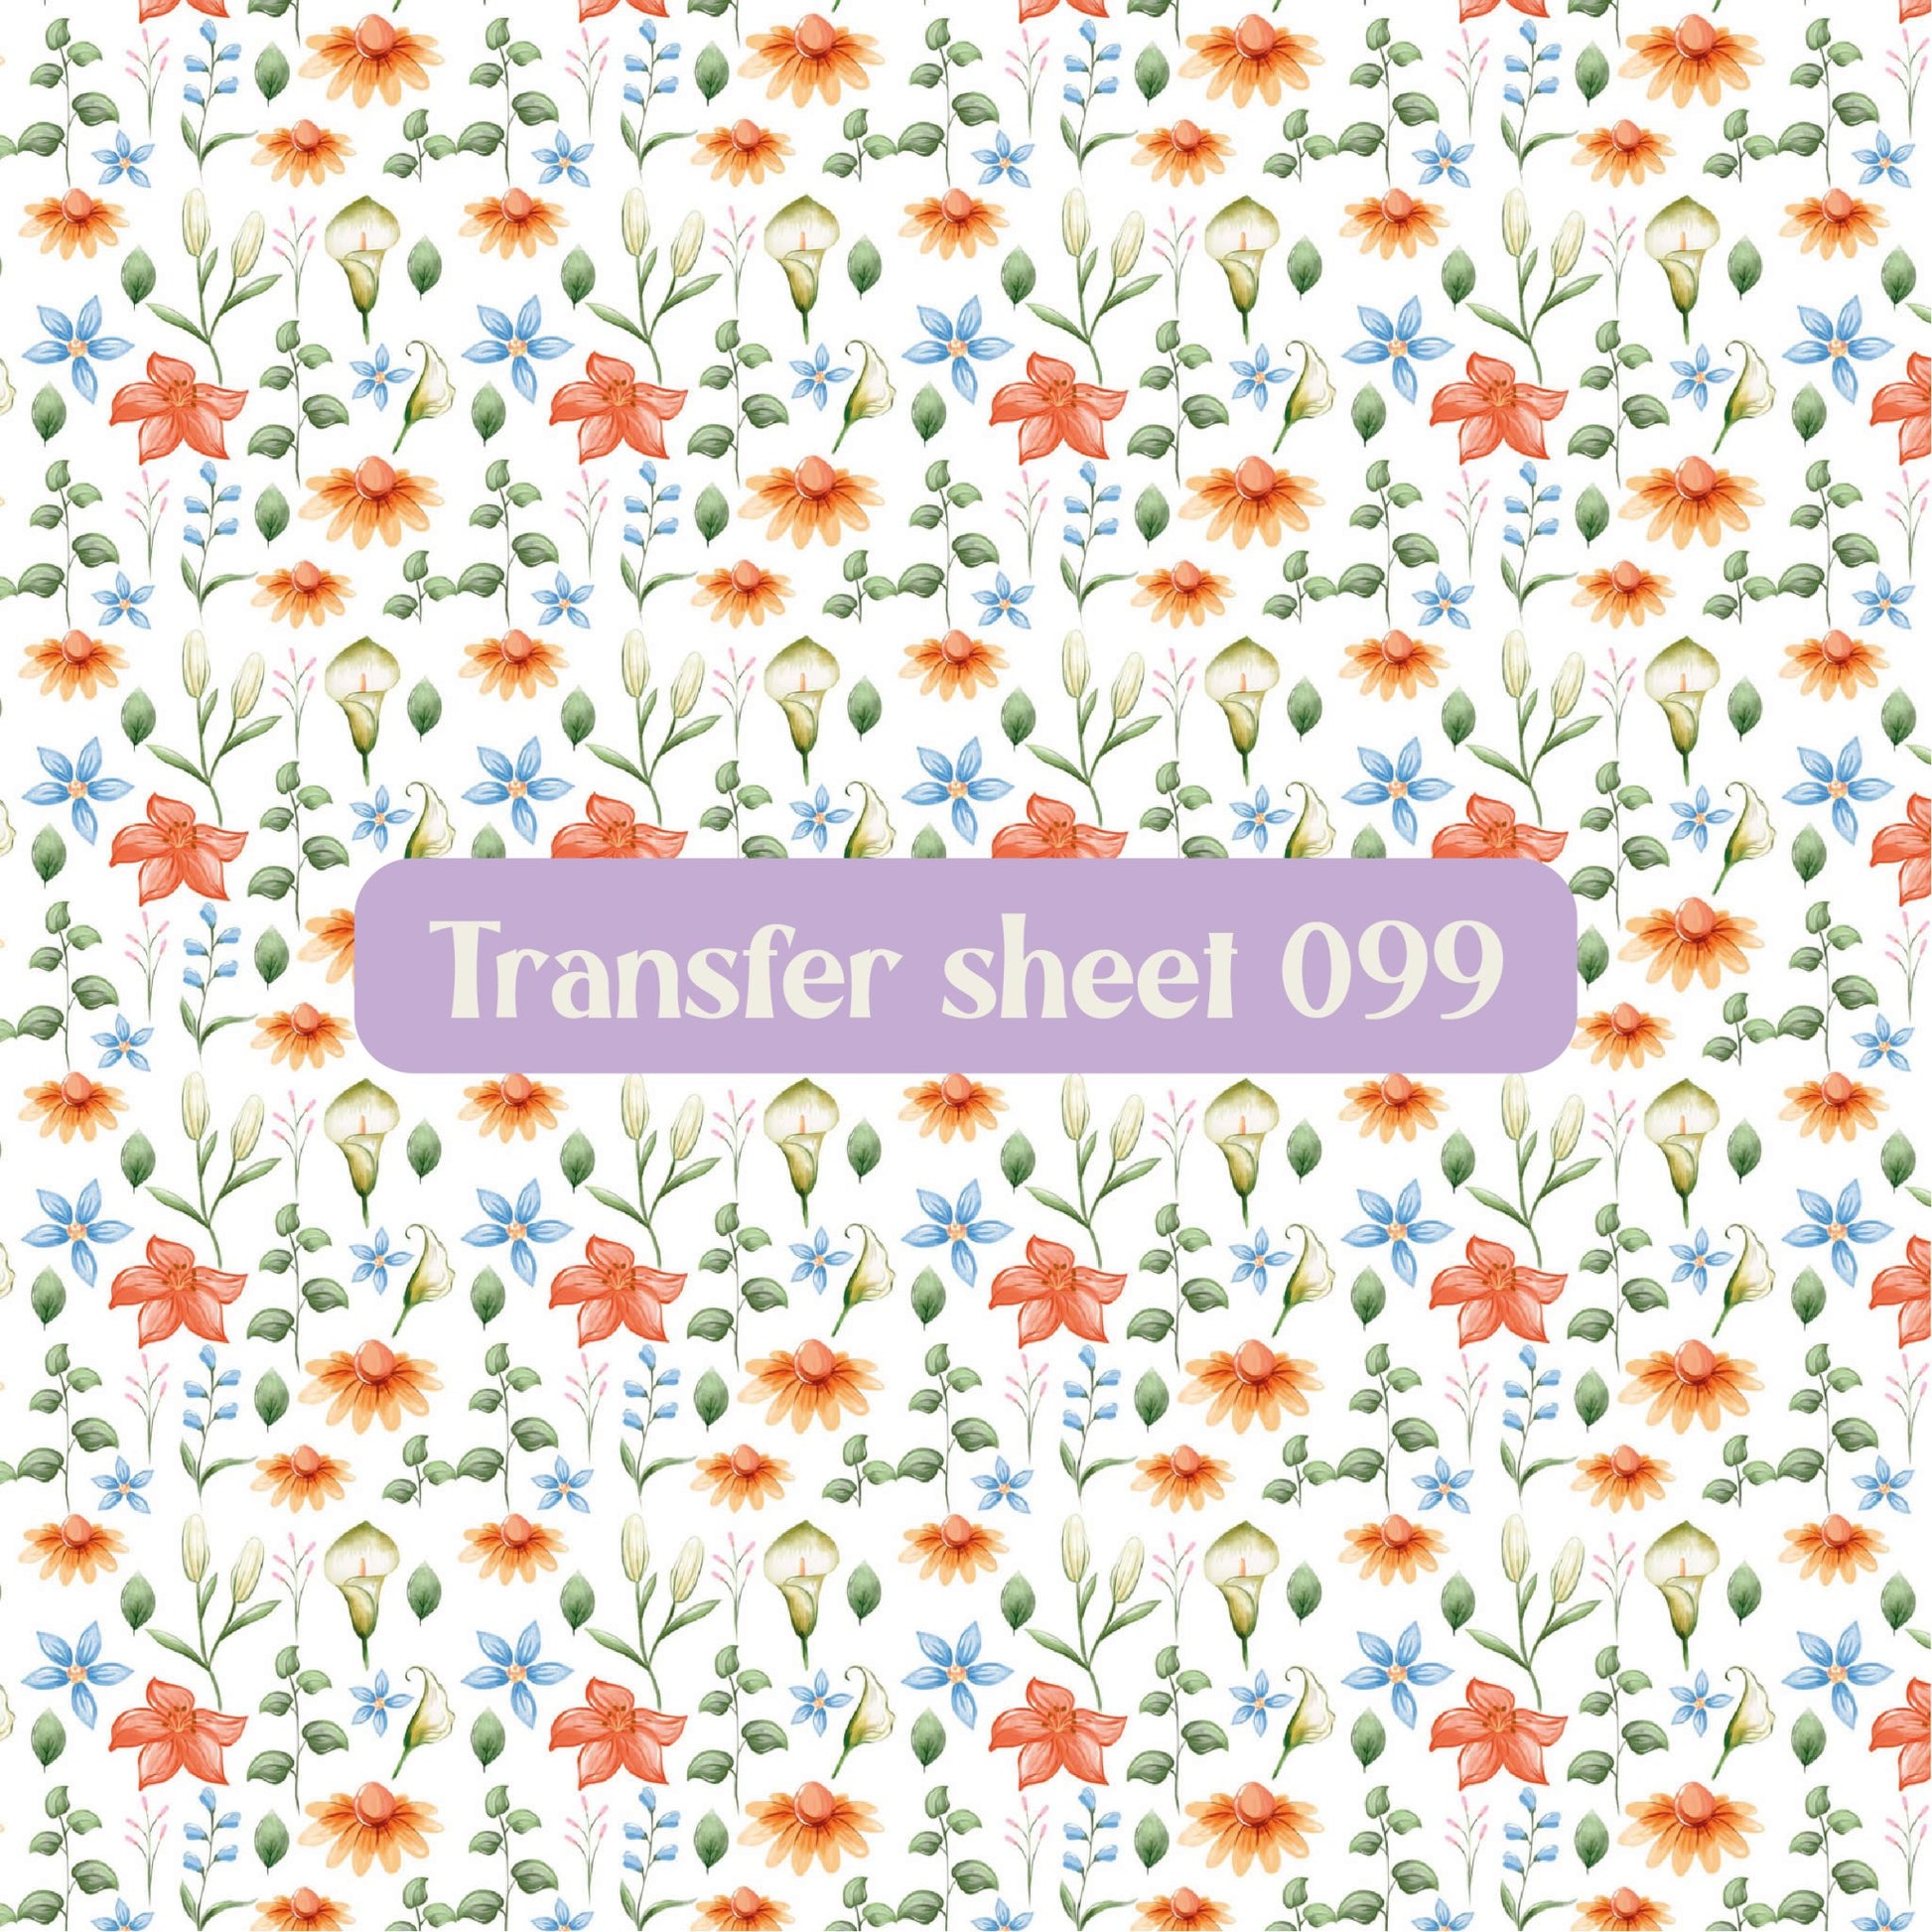 Transfer sheet 099 - Transfer paper - CLN Atelier